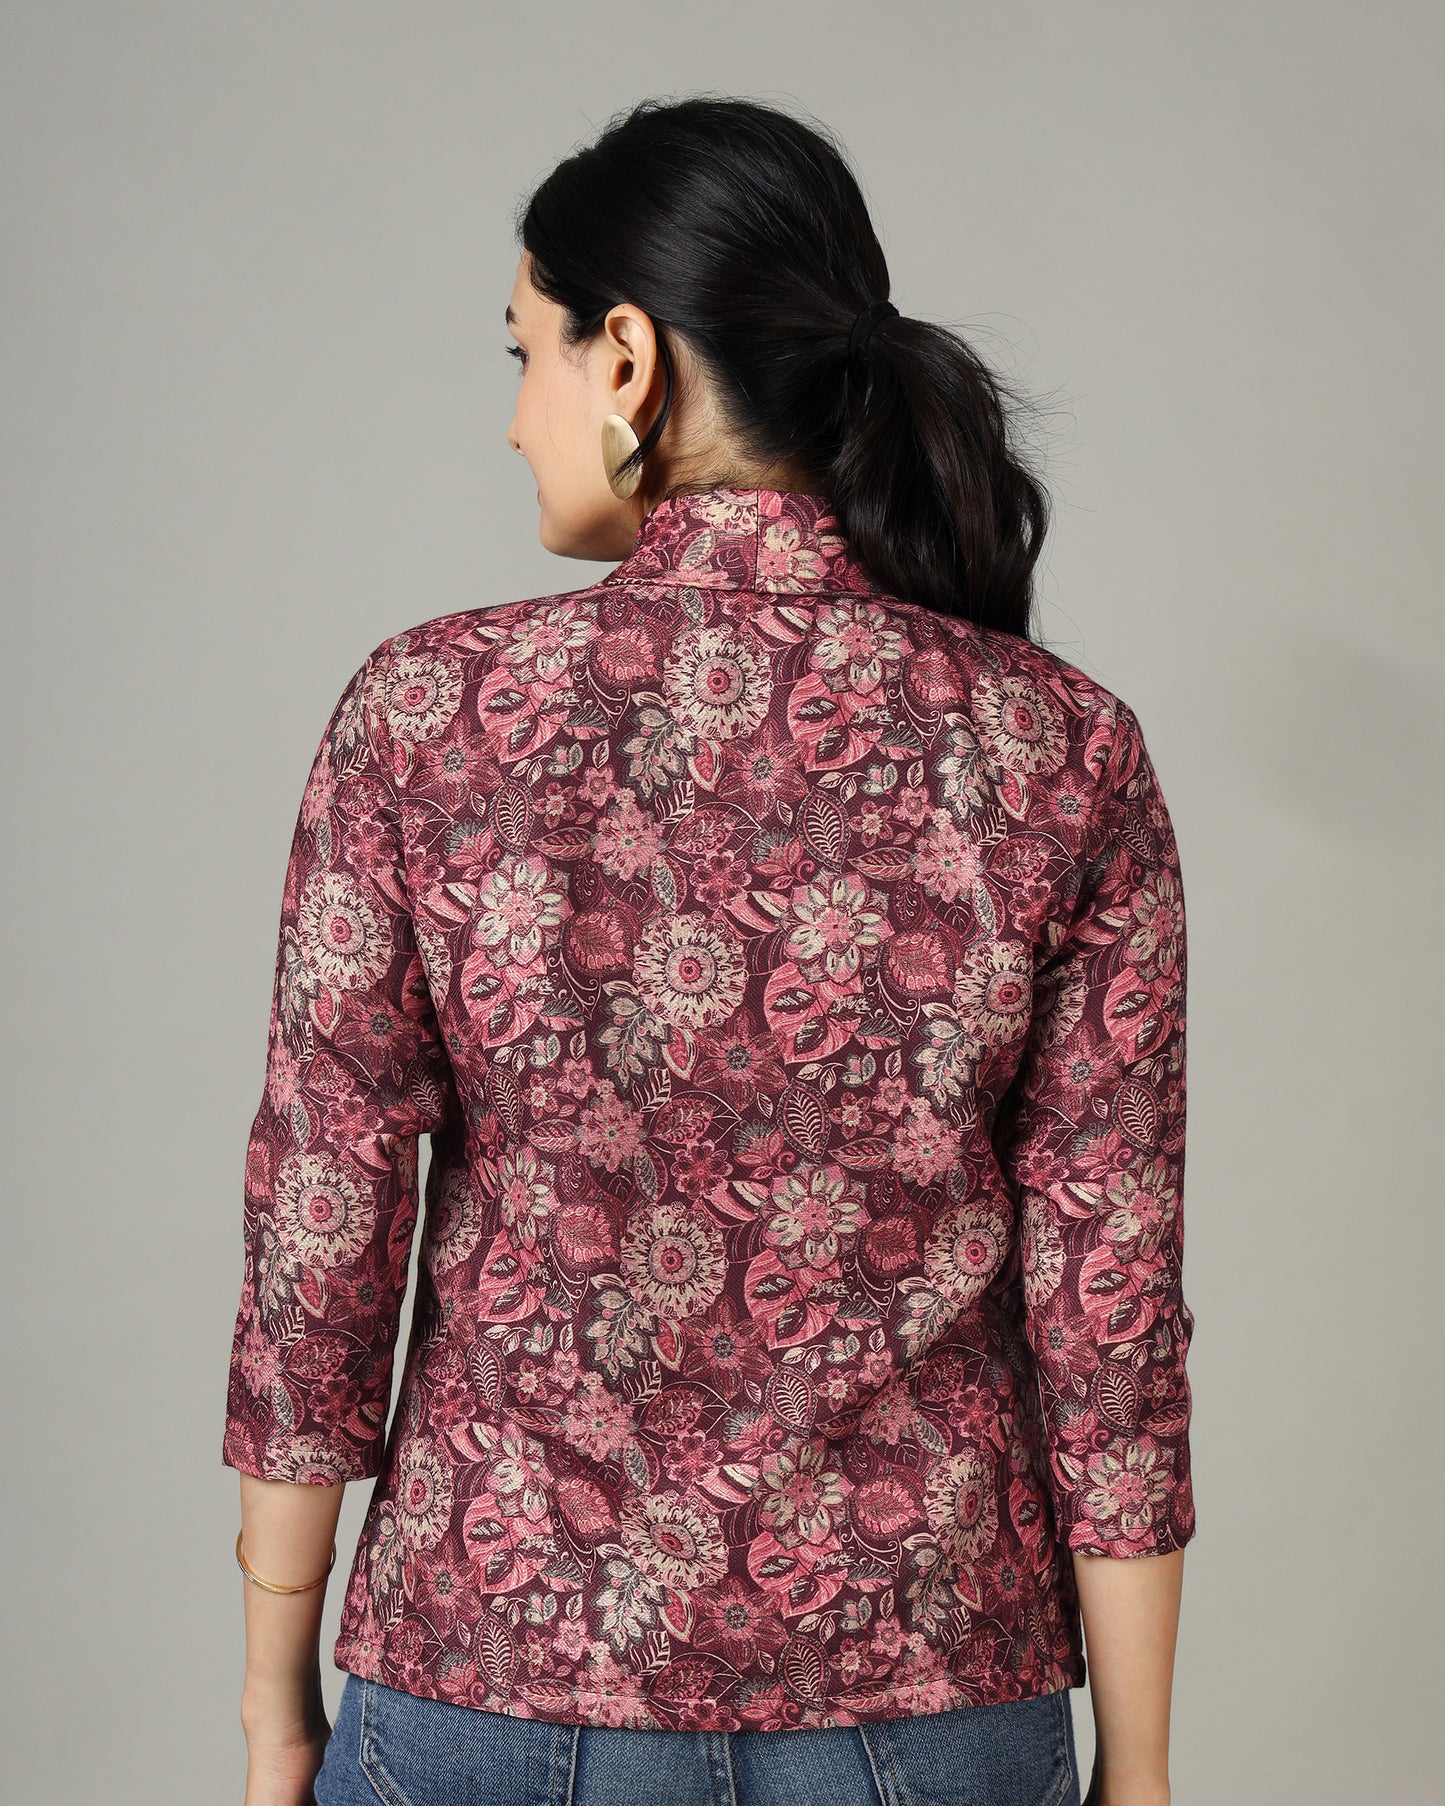 Confidence In Every Stitch: Women's Pashmina Jacket